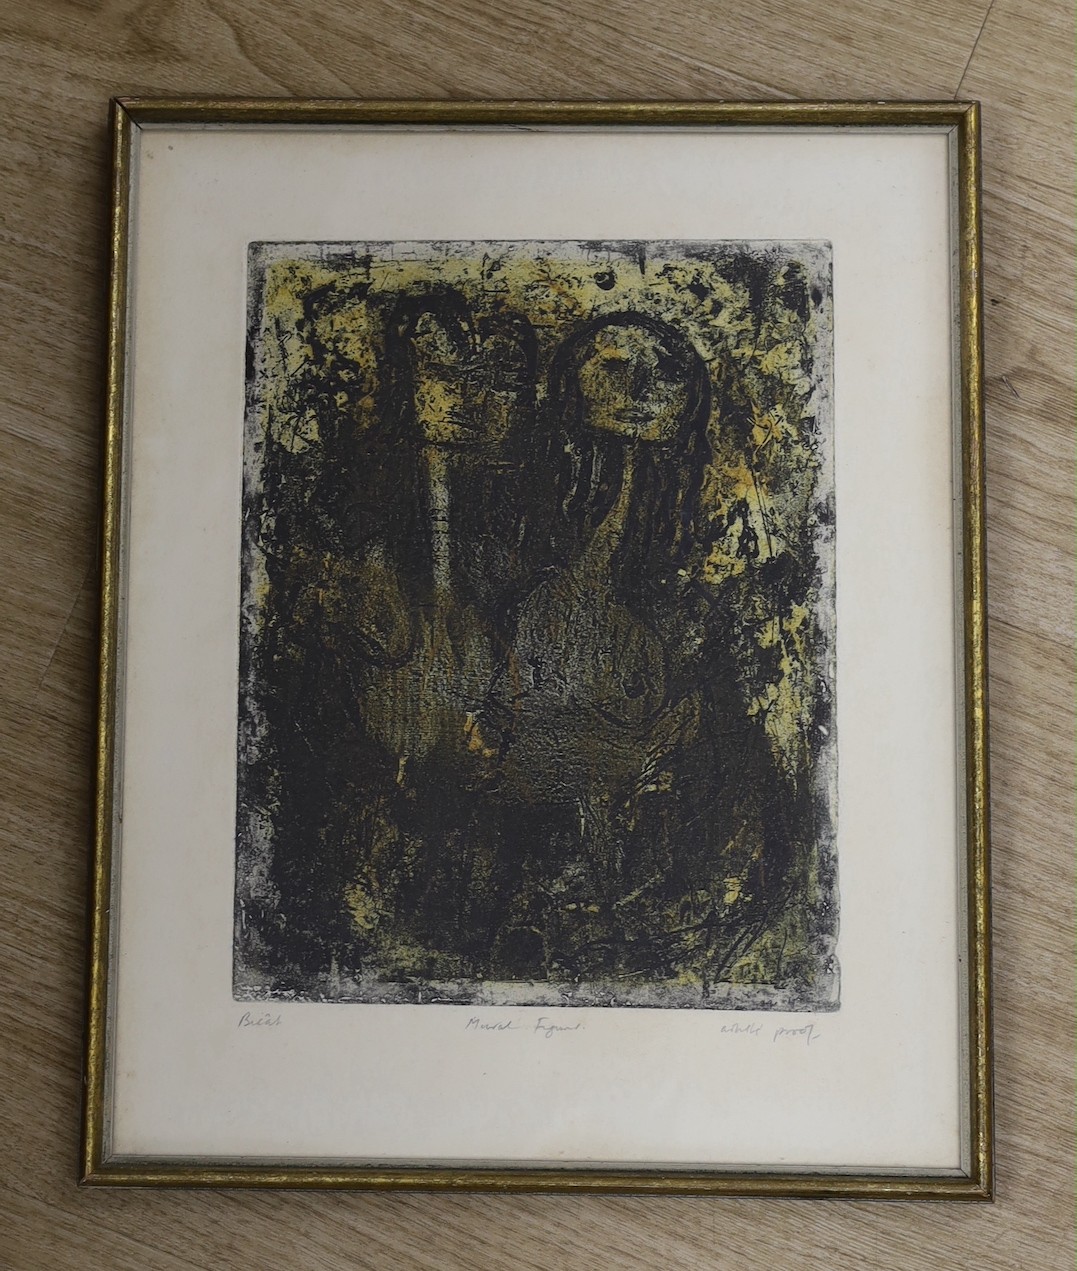 André Bicât (1909-1996), artist proof print, 'Mural figures', signed in pencil, 31 x 24cm